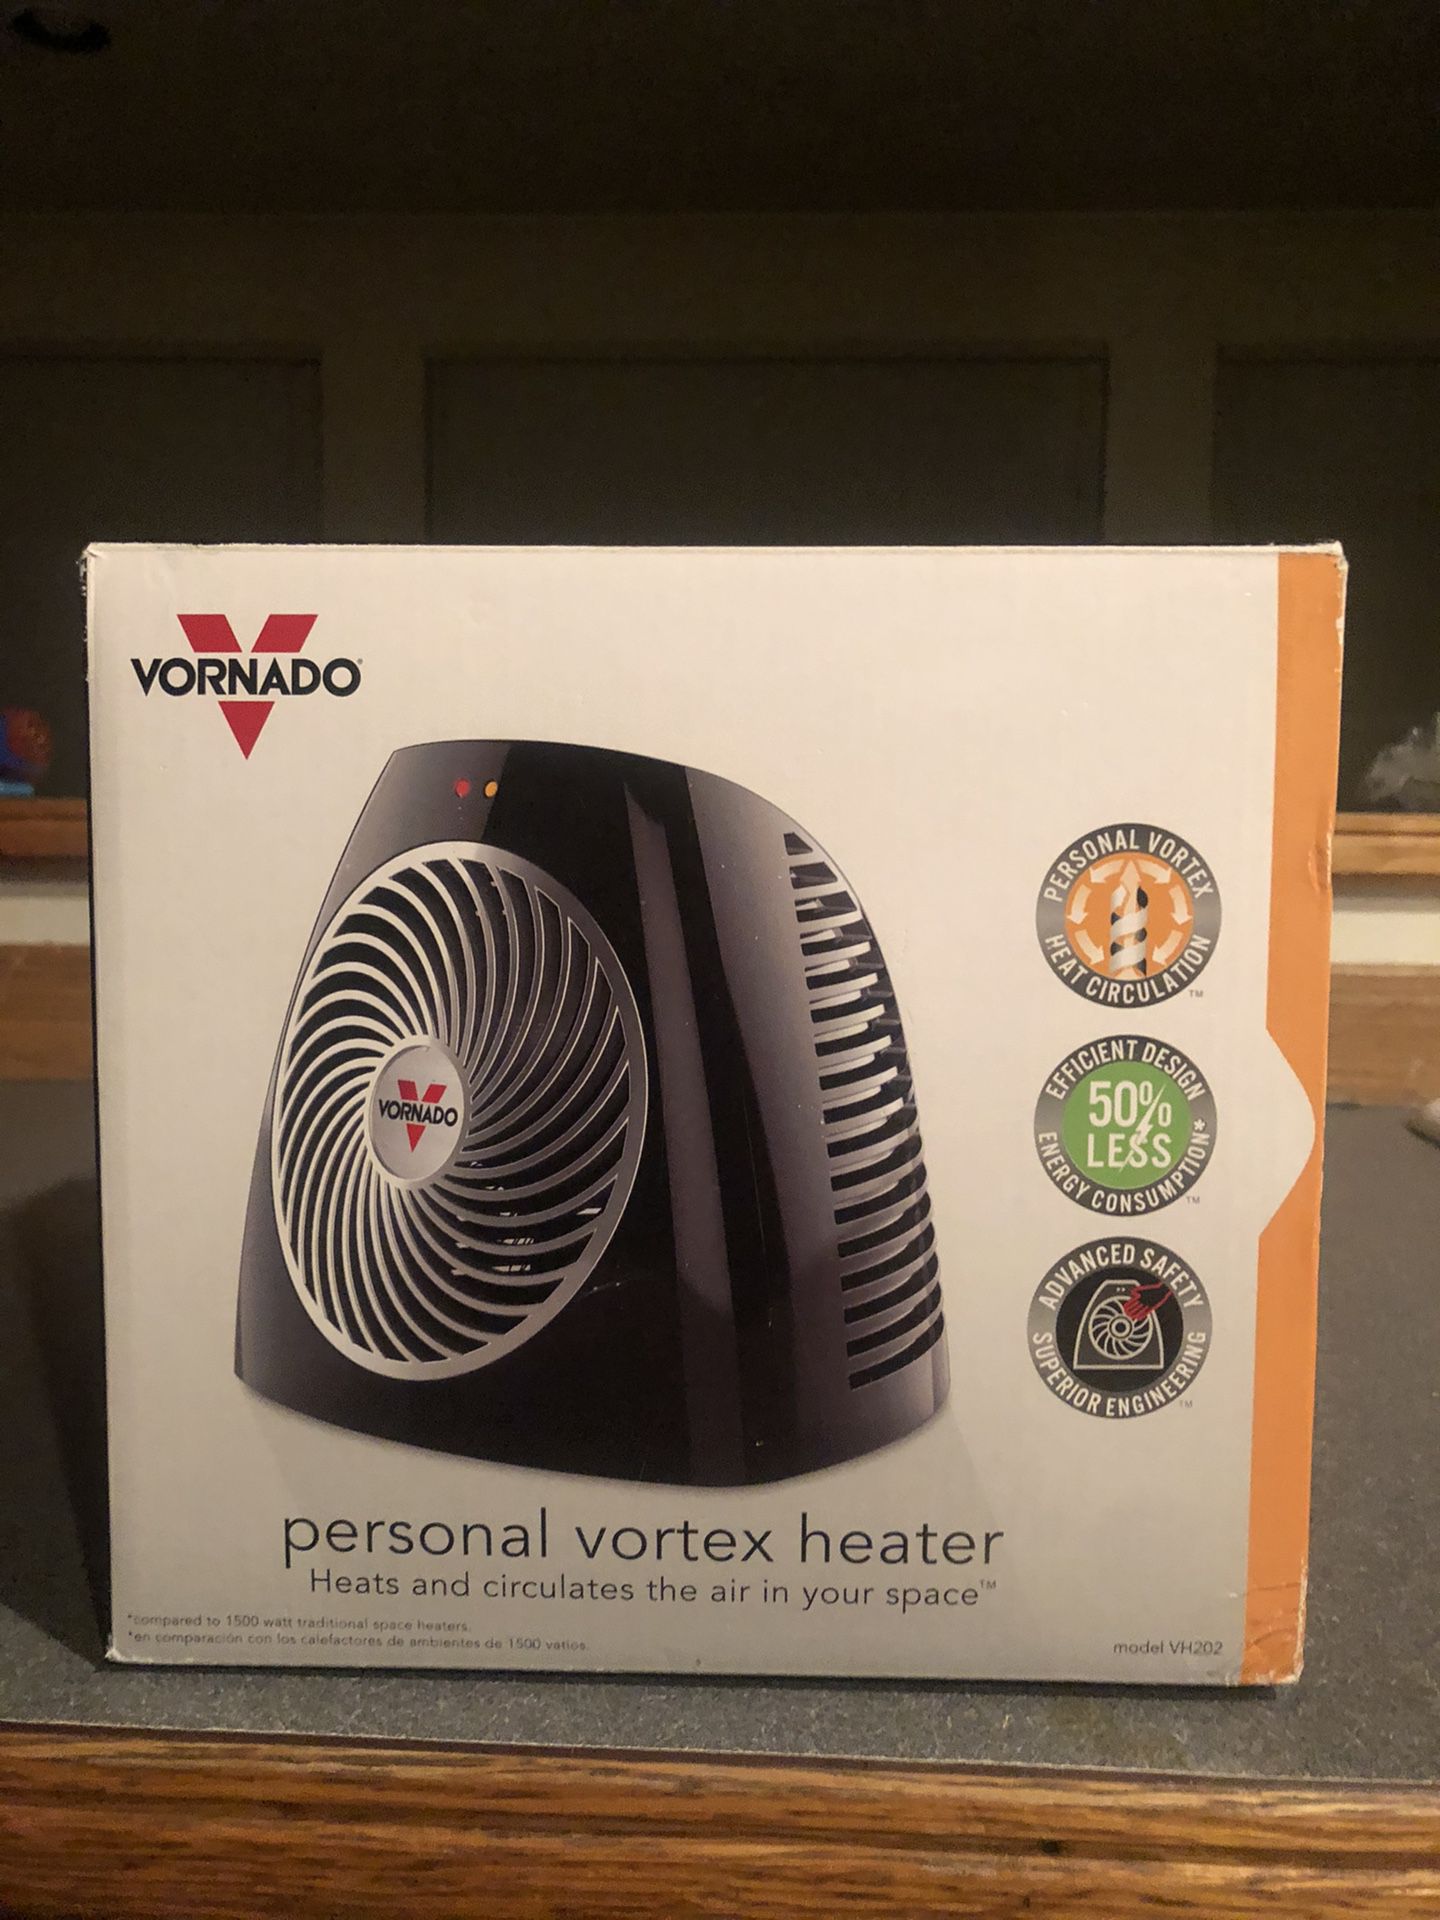 Vornado Personal Heater